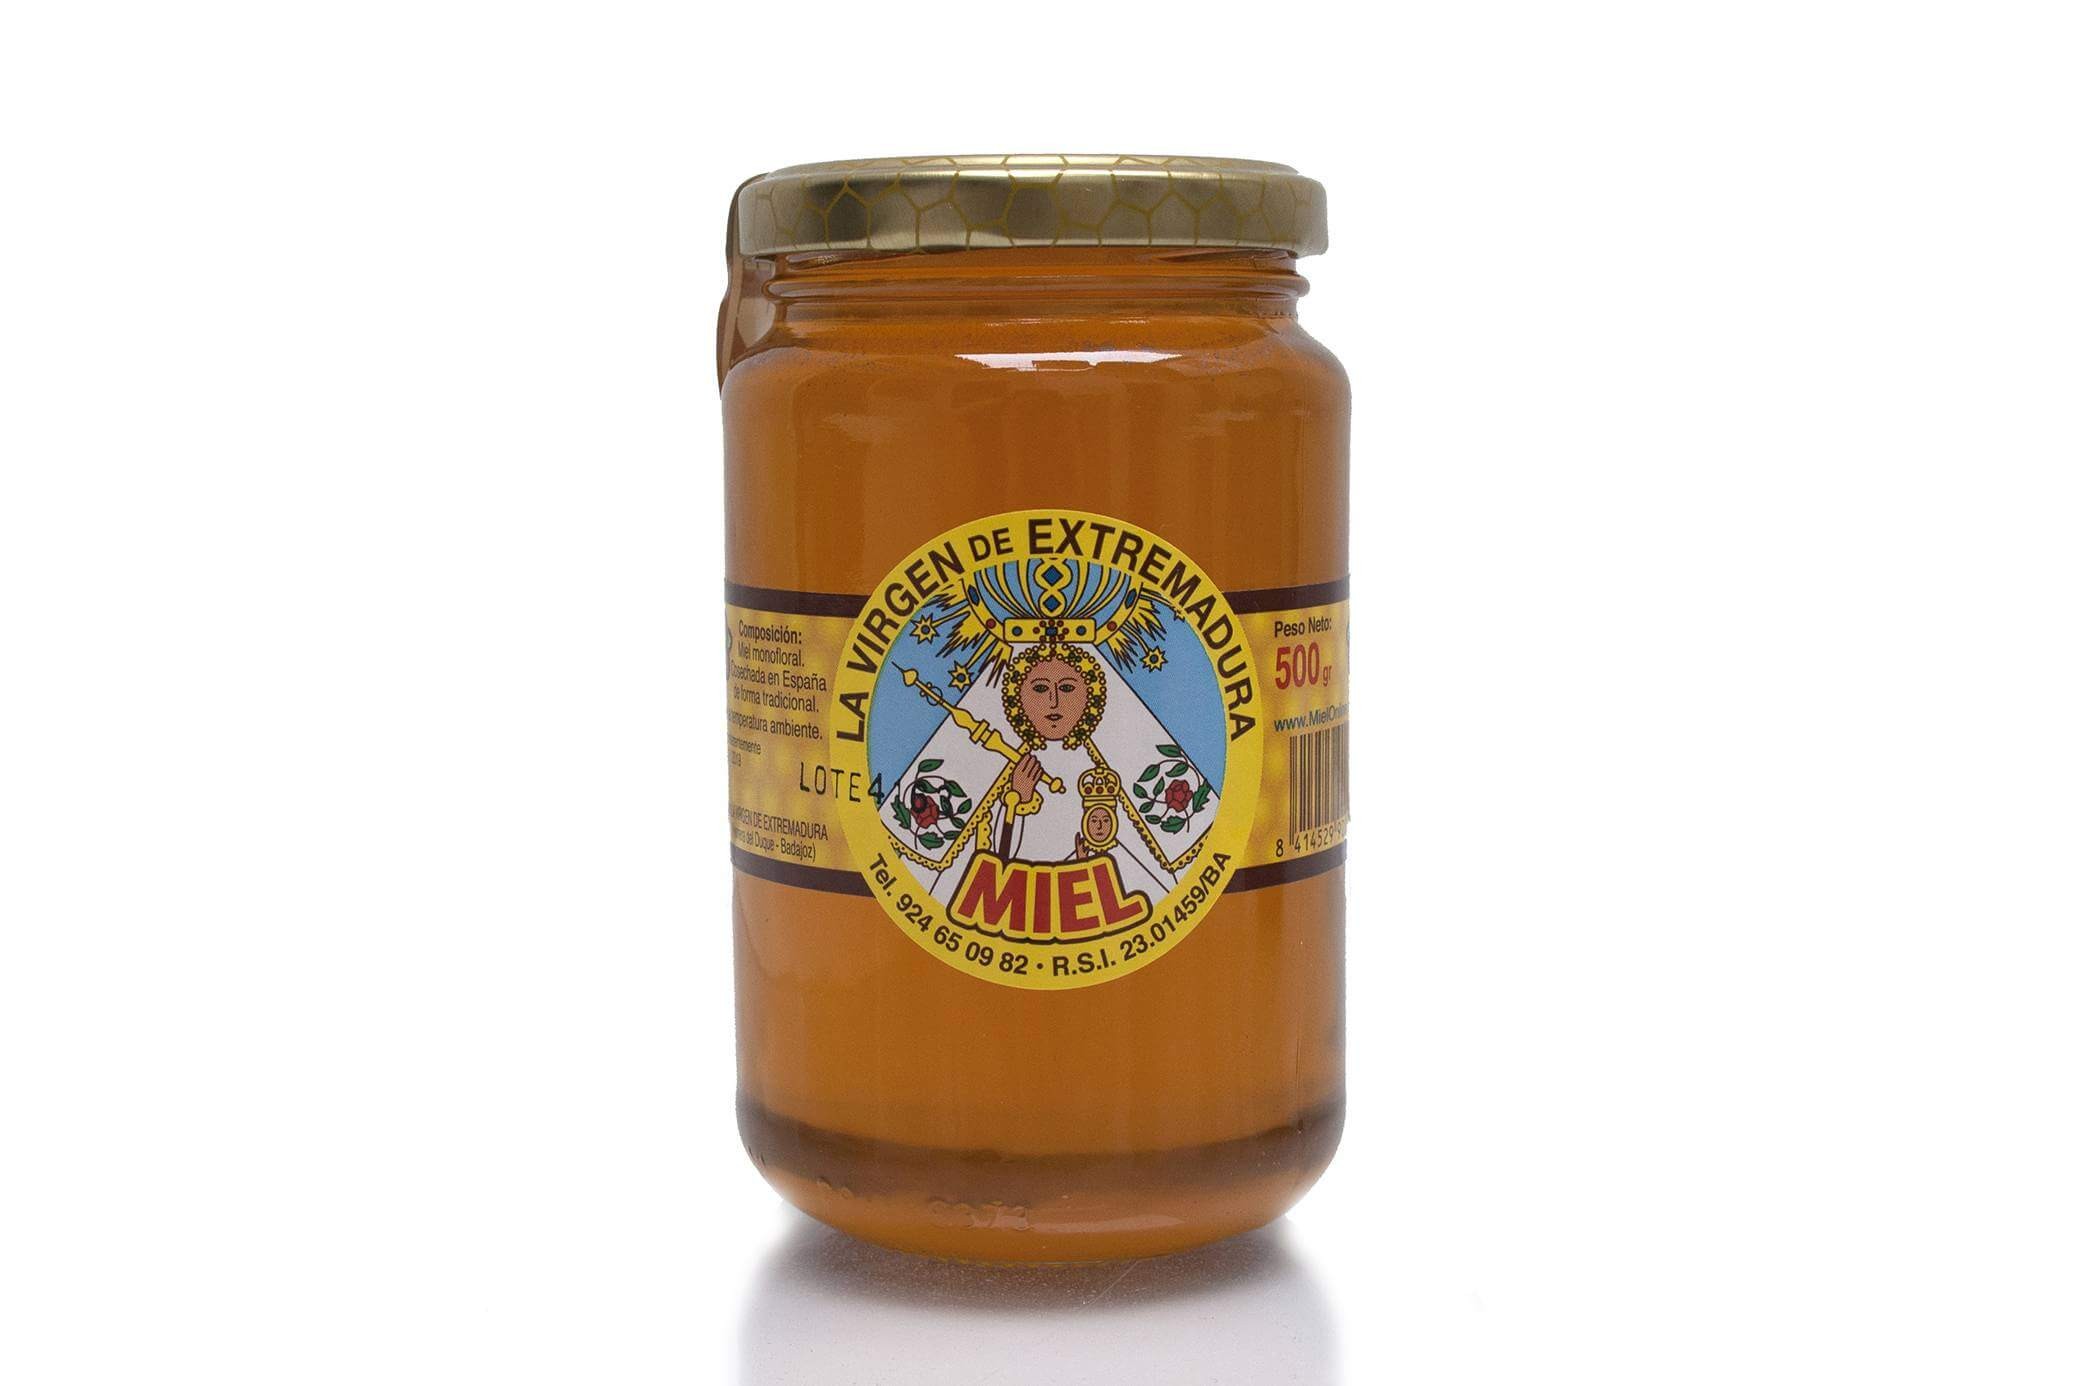 Orange Blossom Honey (500g)